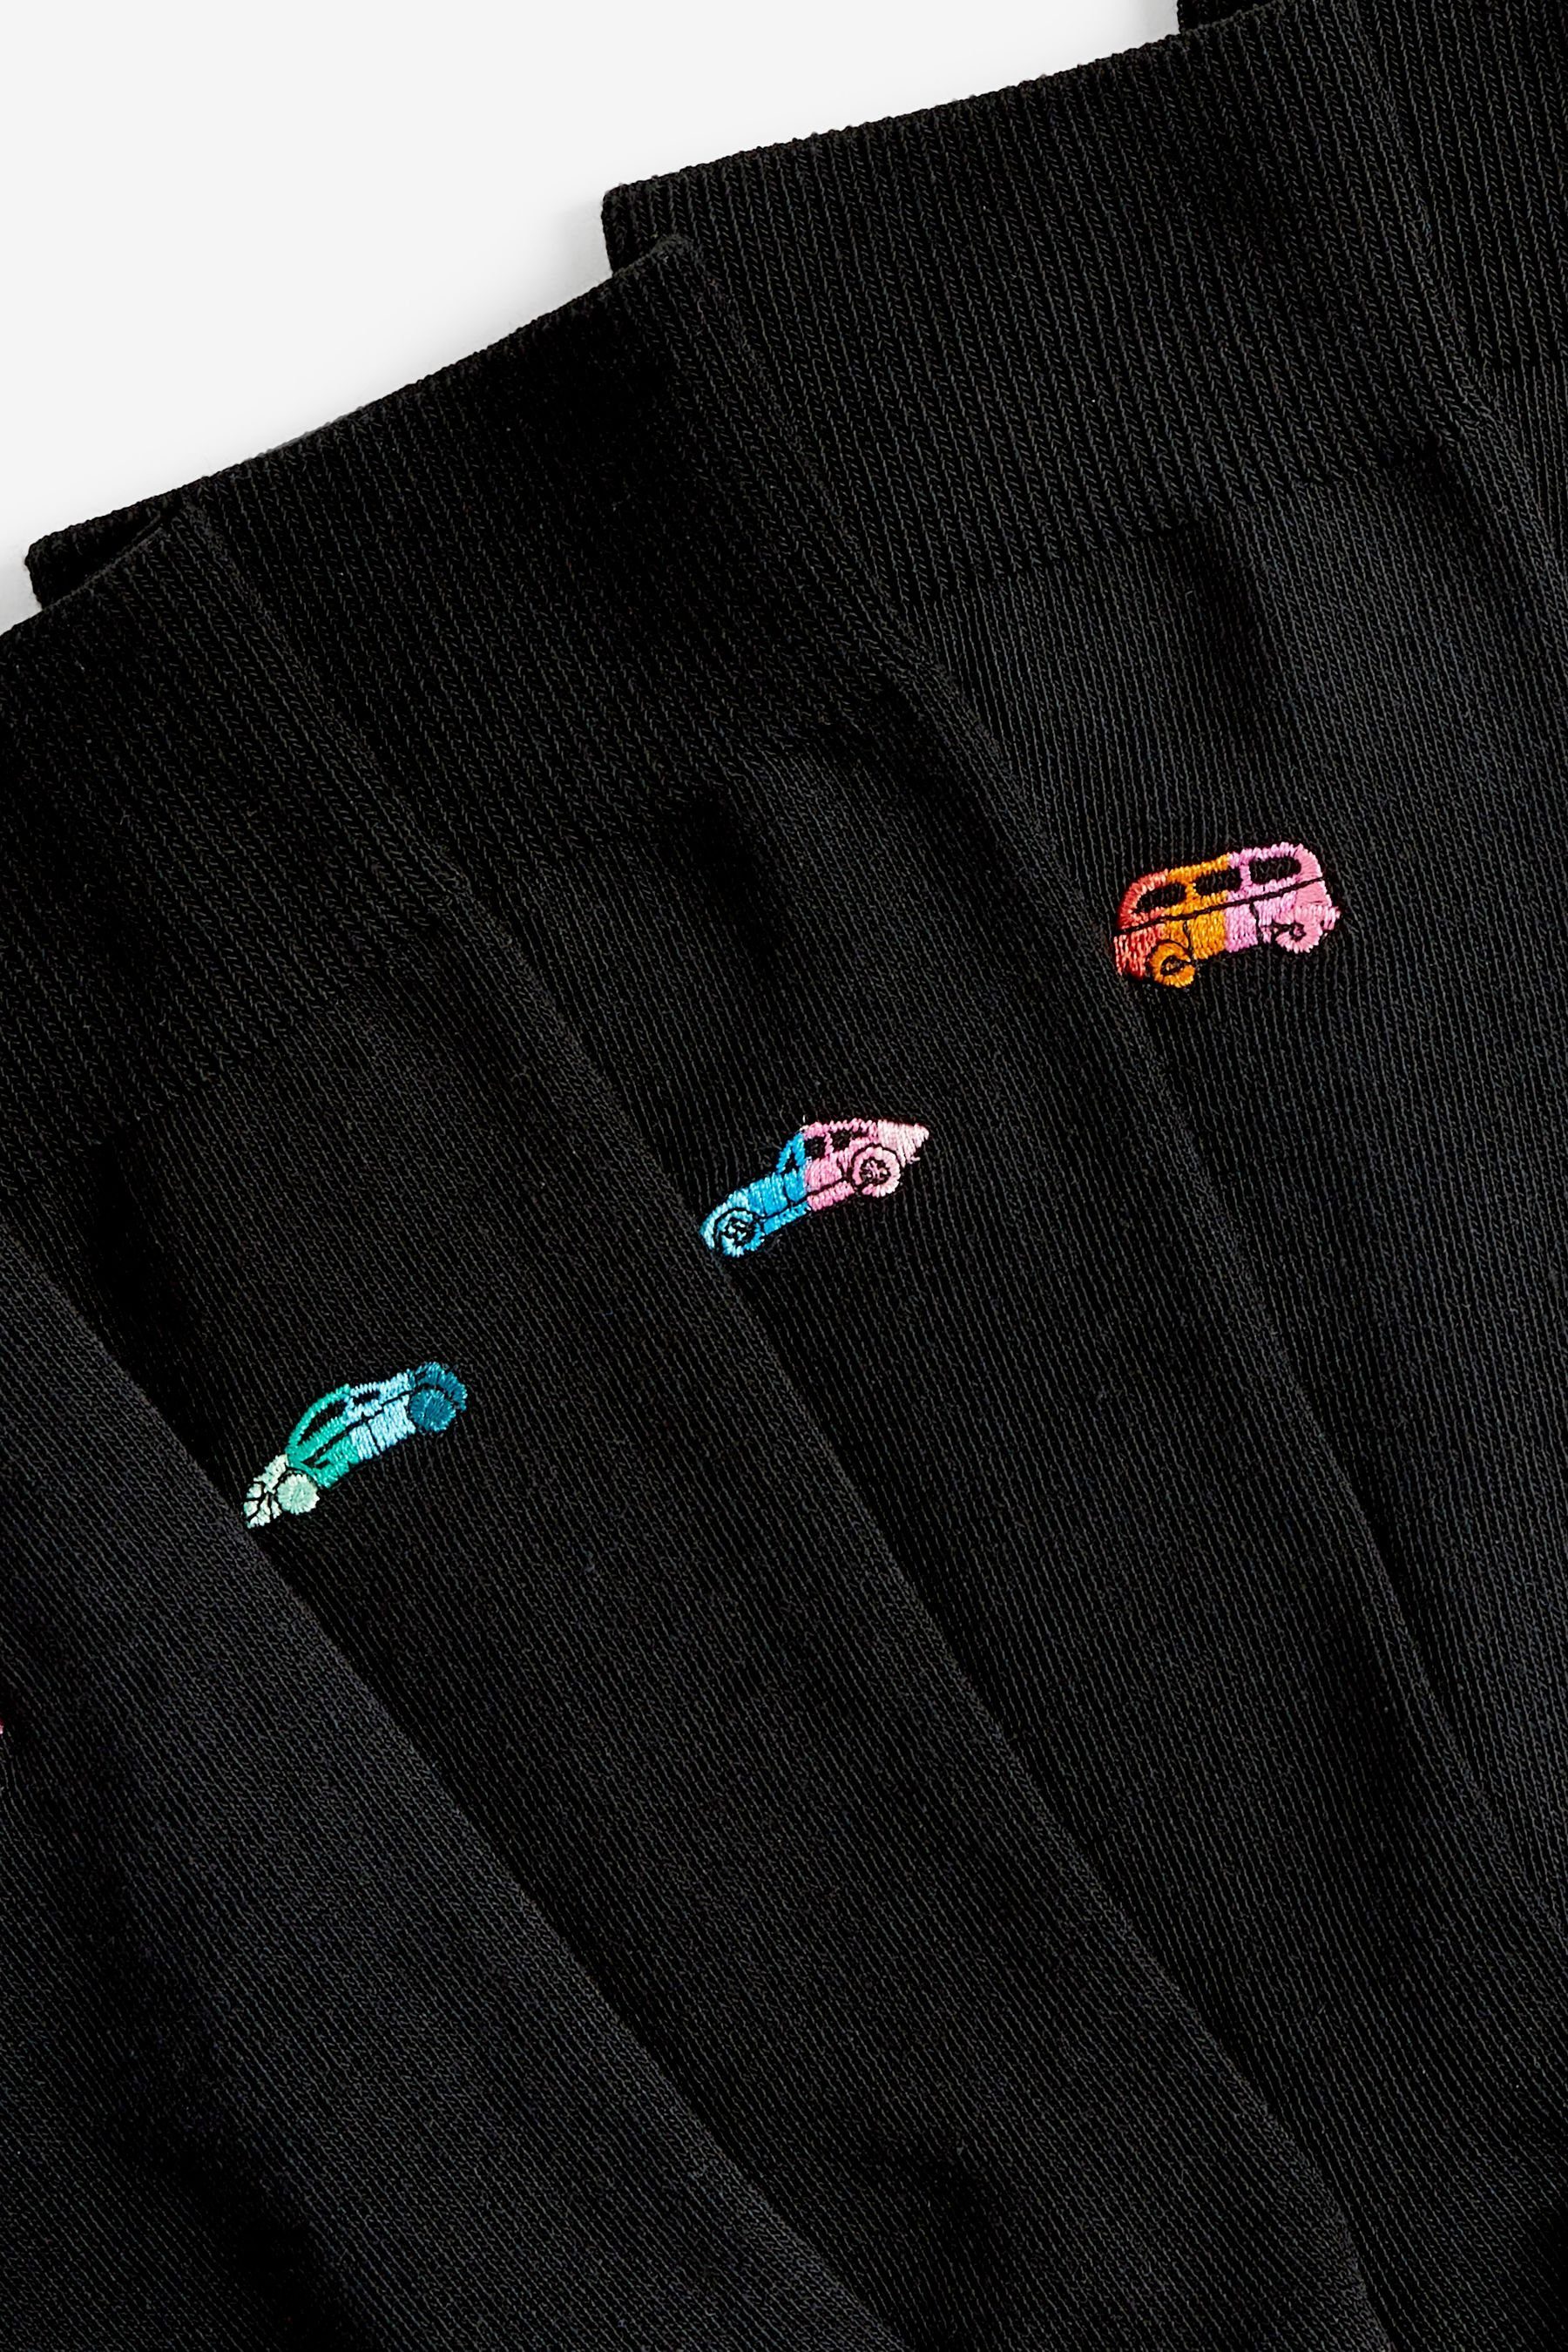 Ombre (8-Paar) Stickerei mit Black Next Cars Kurzsocken Socken